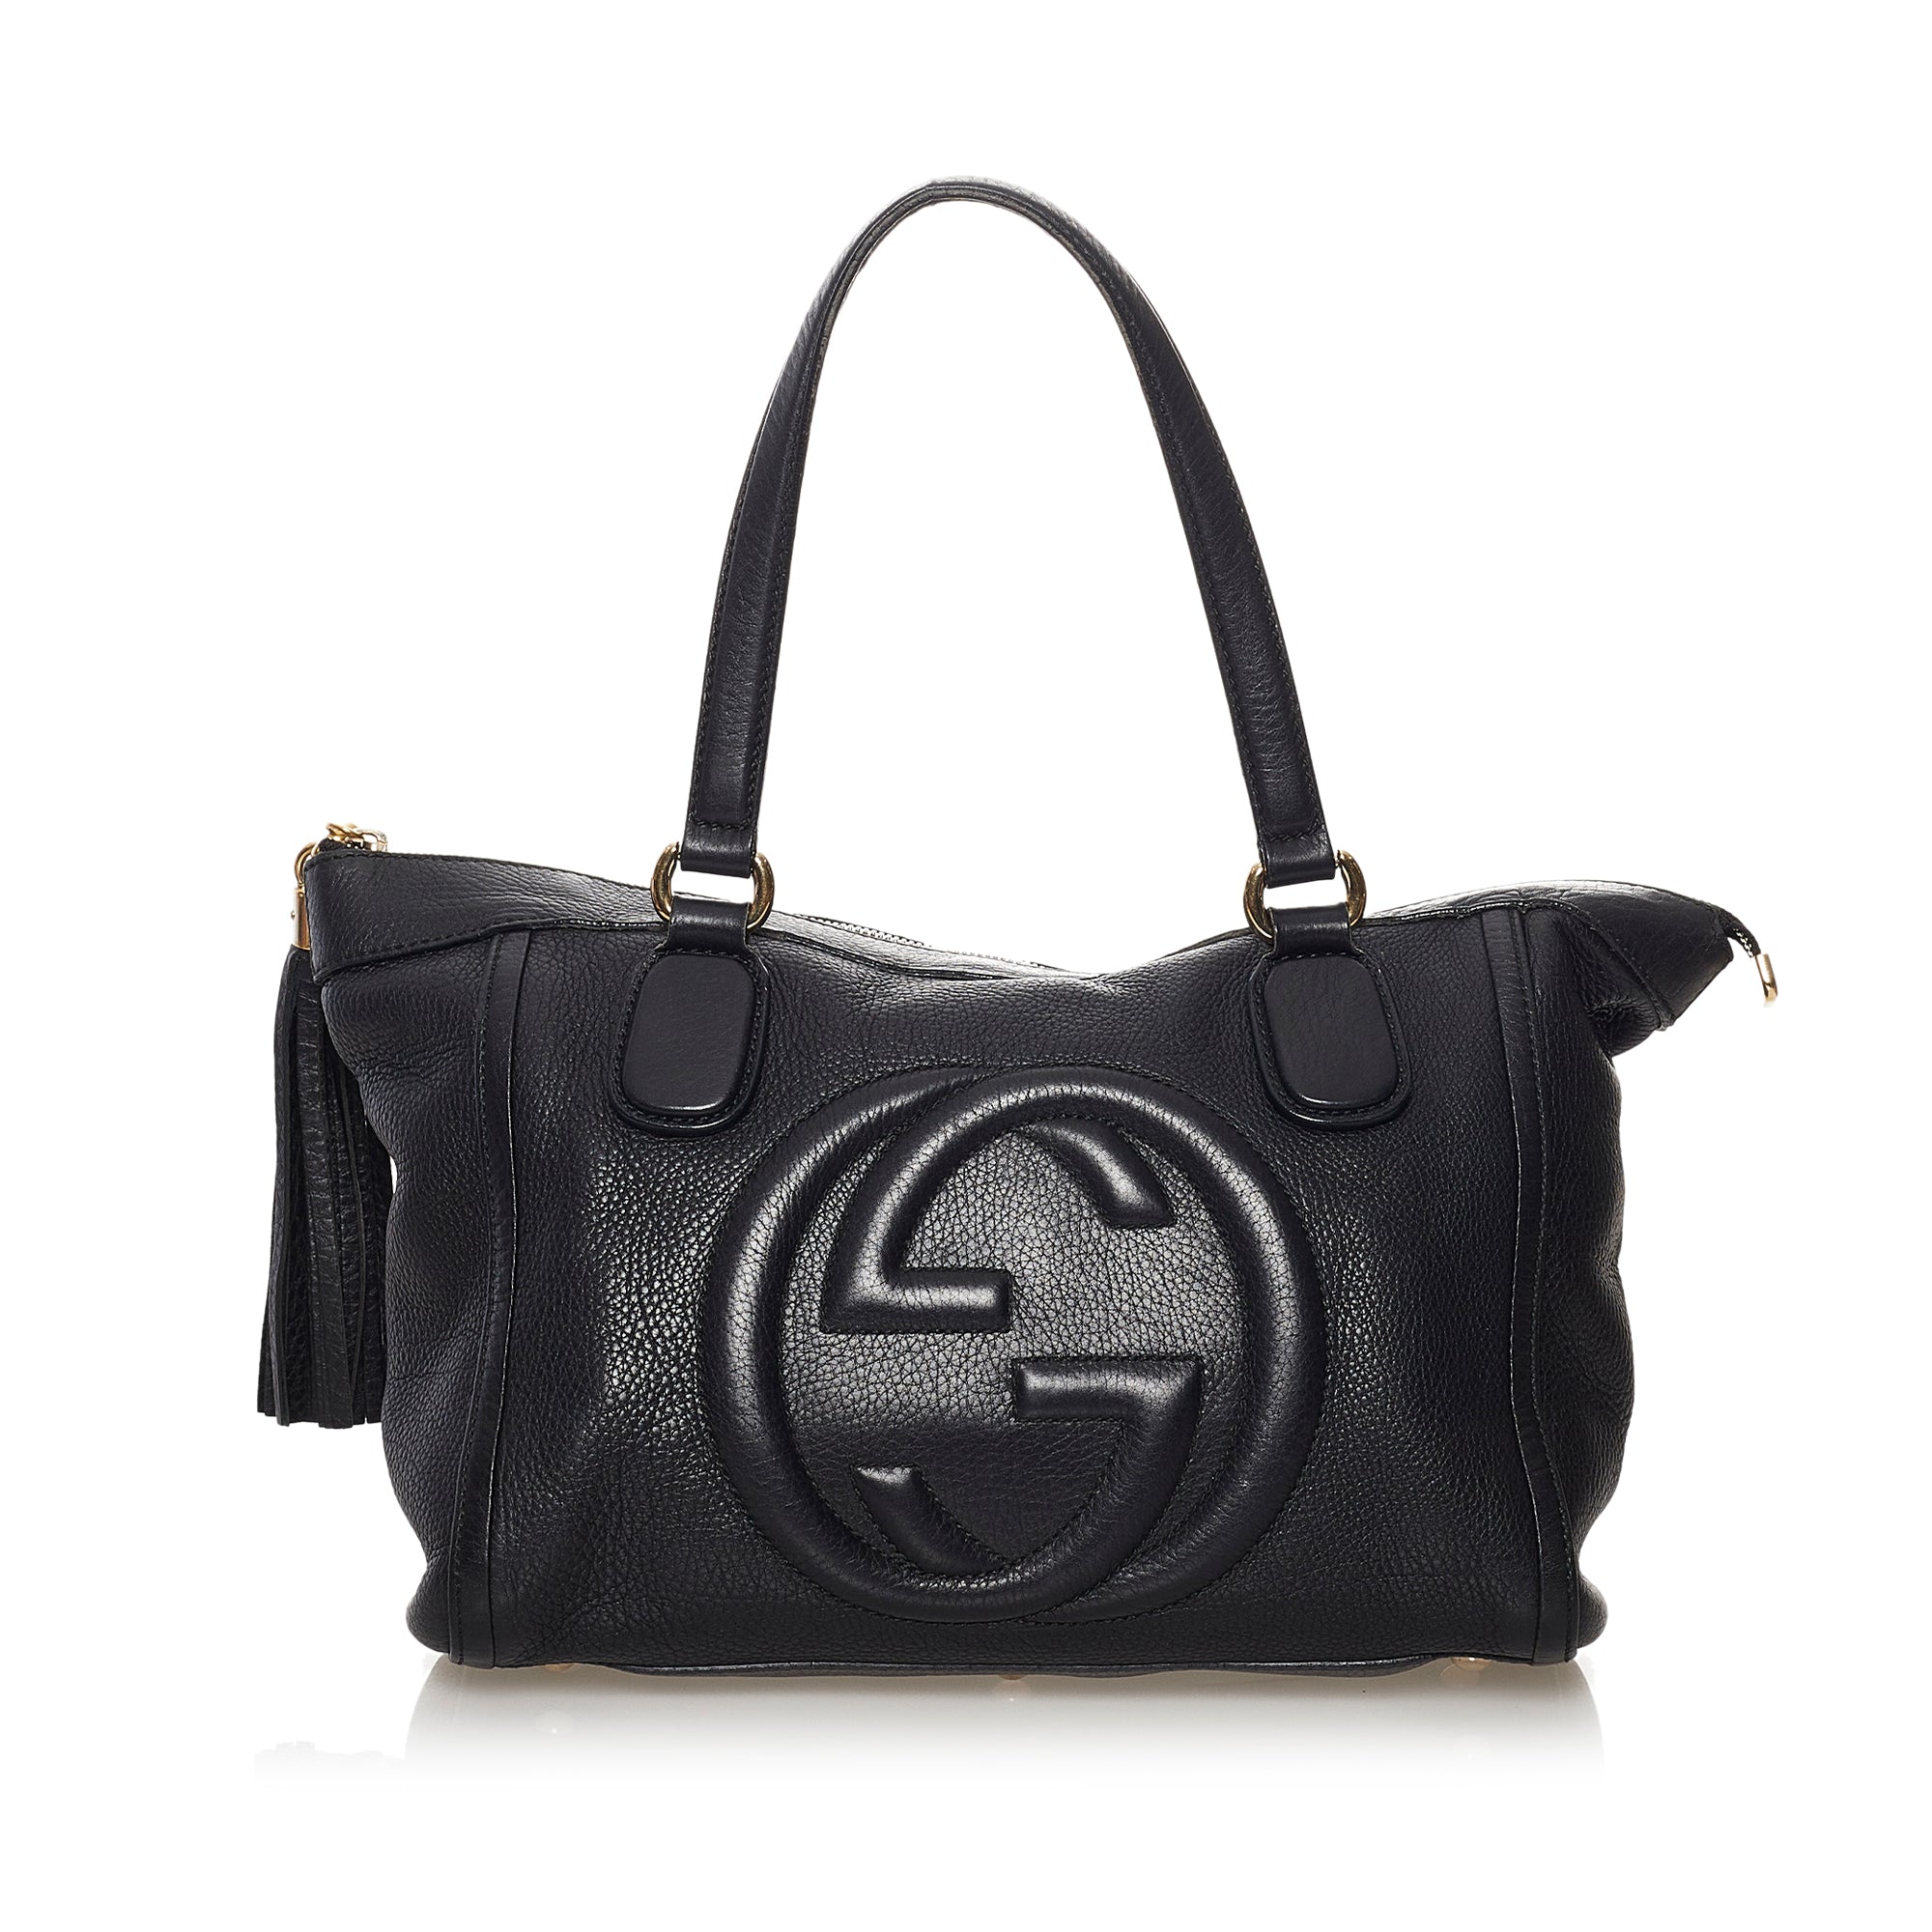 Black Gucci Soho Working Leather Tote Bag - Designer Revival